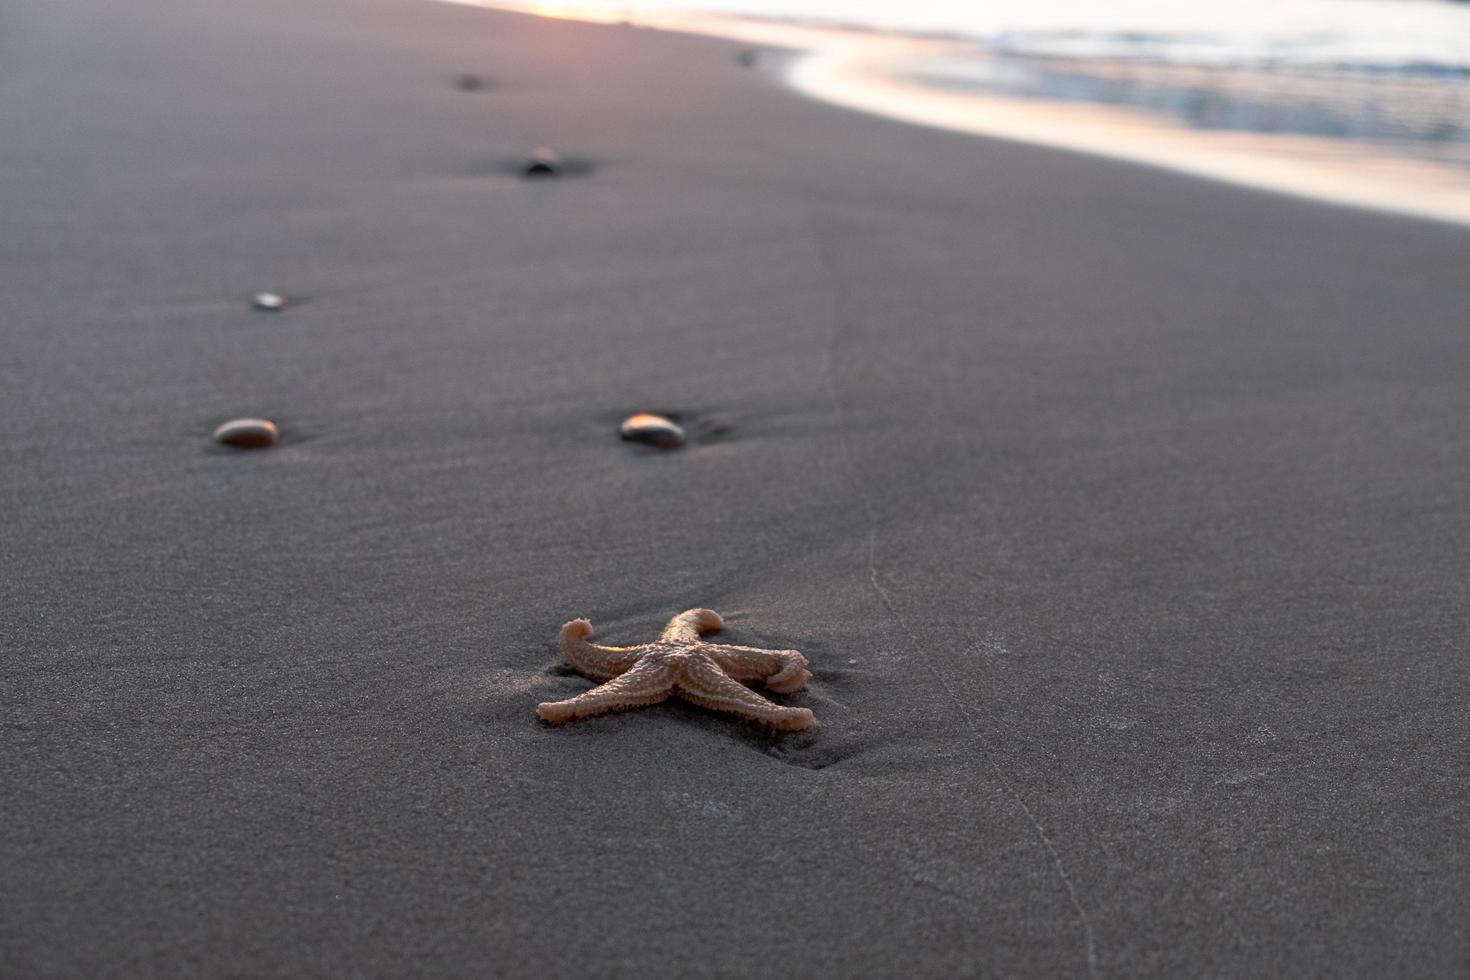 estrella de mar en la arena foto